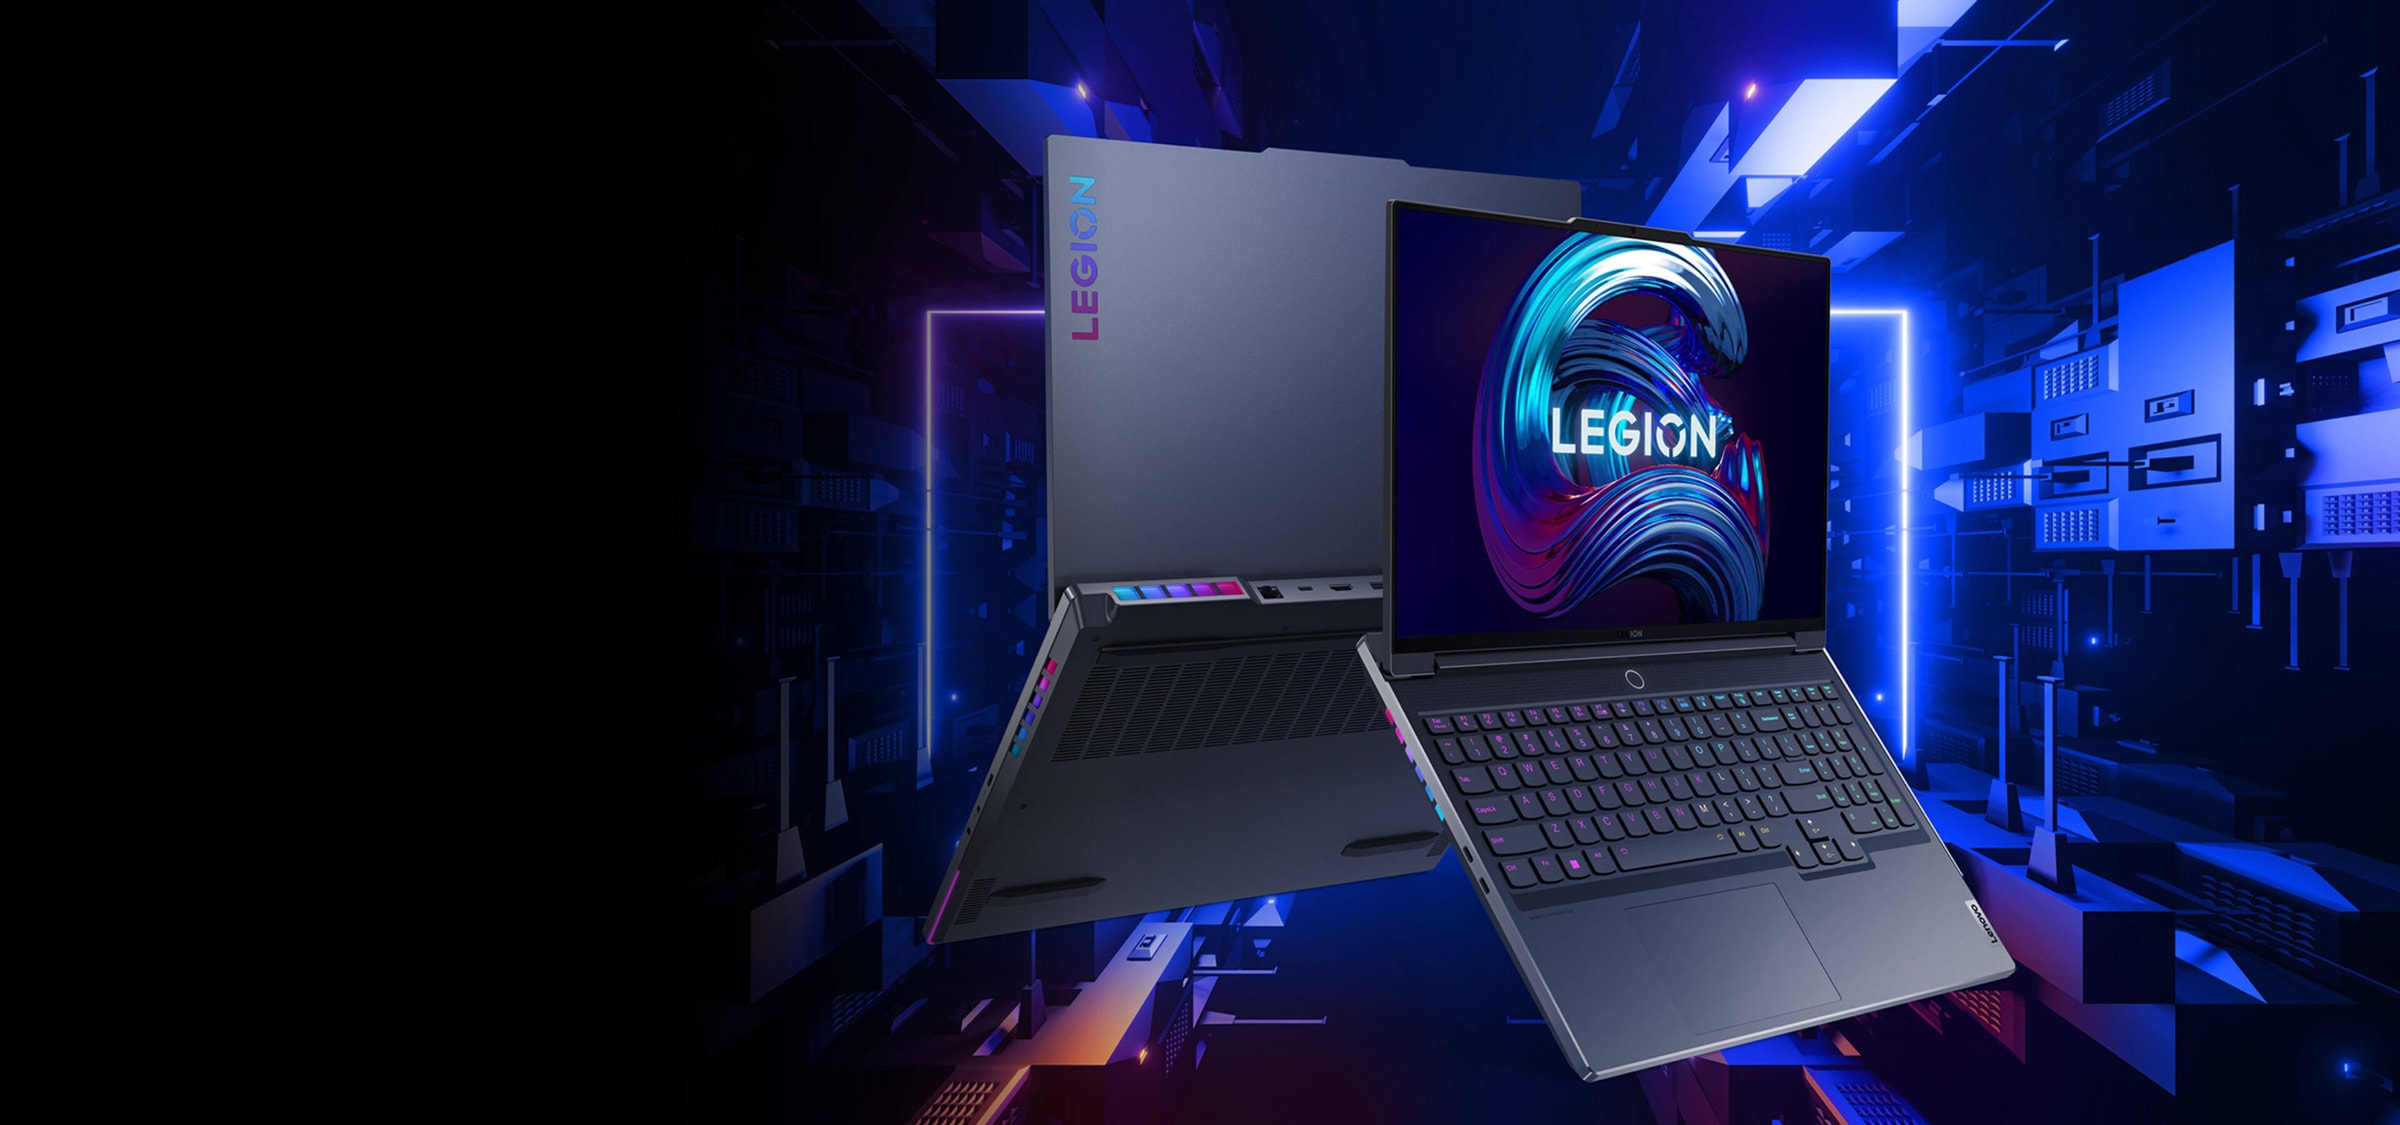 Legion 7 筆記本電腦以正面打開 135 度，從底座向前傾斜，展現鍵盤、顯示屏，並傾斜顯示左側端口和背面的鏡像圖。